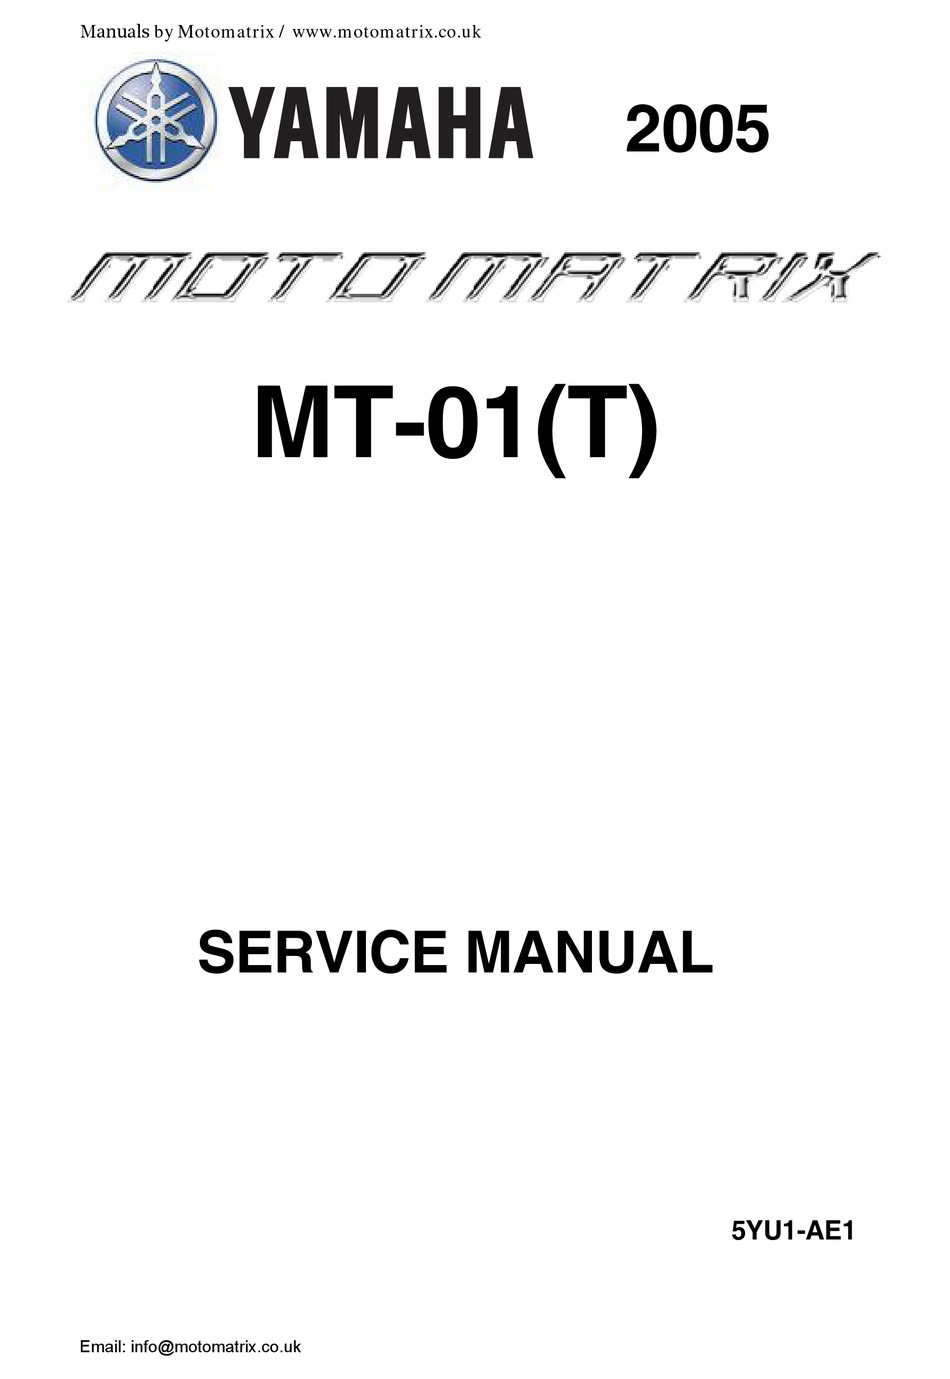 YAMAHA MT-01 SERVICE MANUAL Pdf Download | ManualsLib